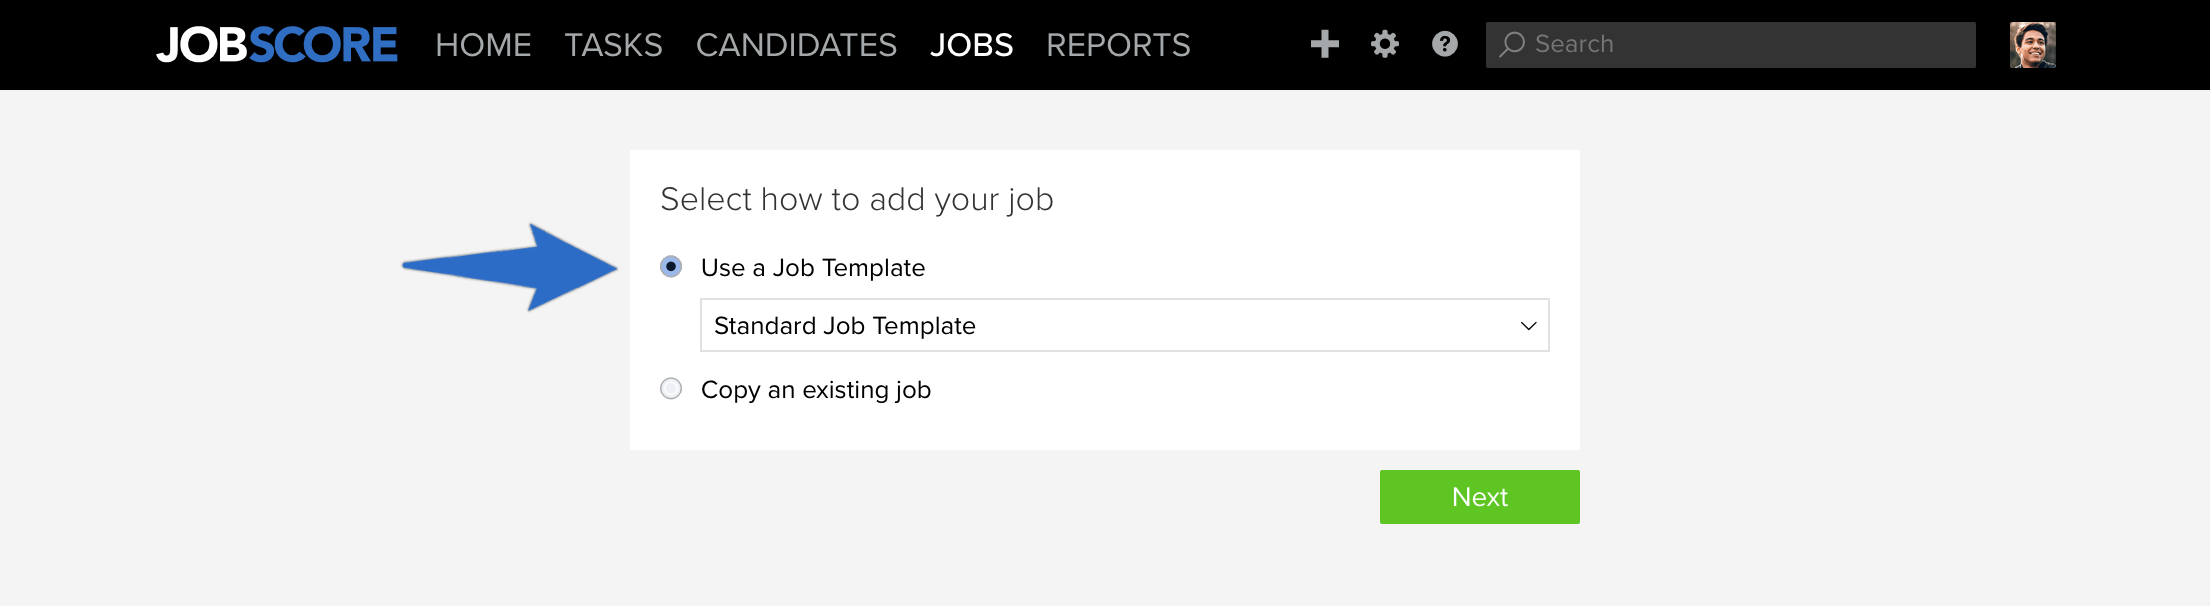 select_use_a_job_template